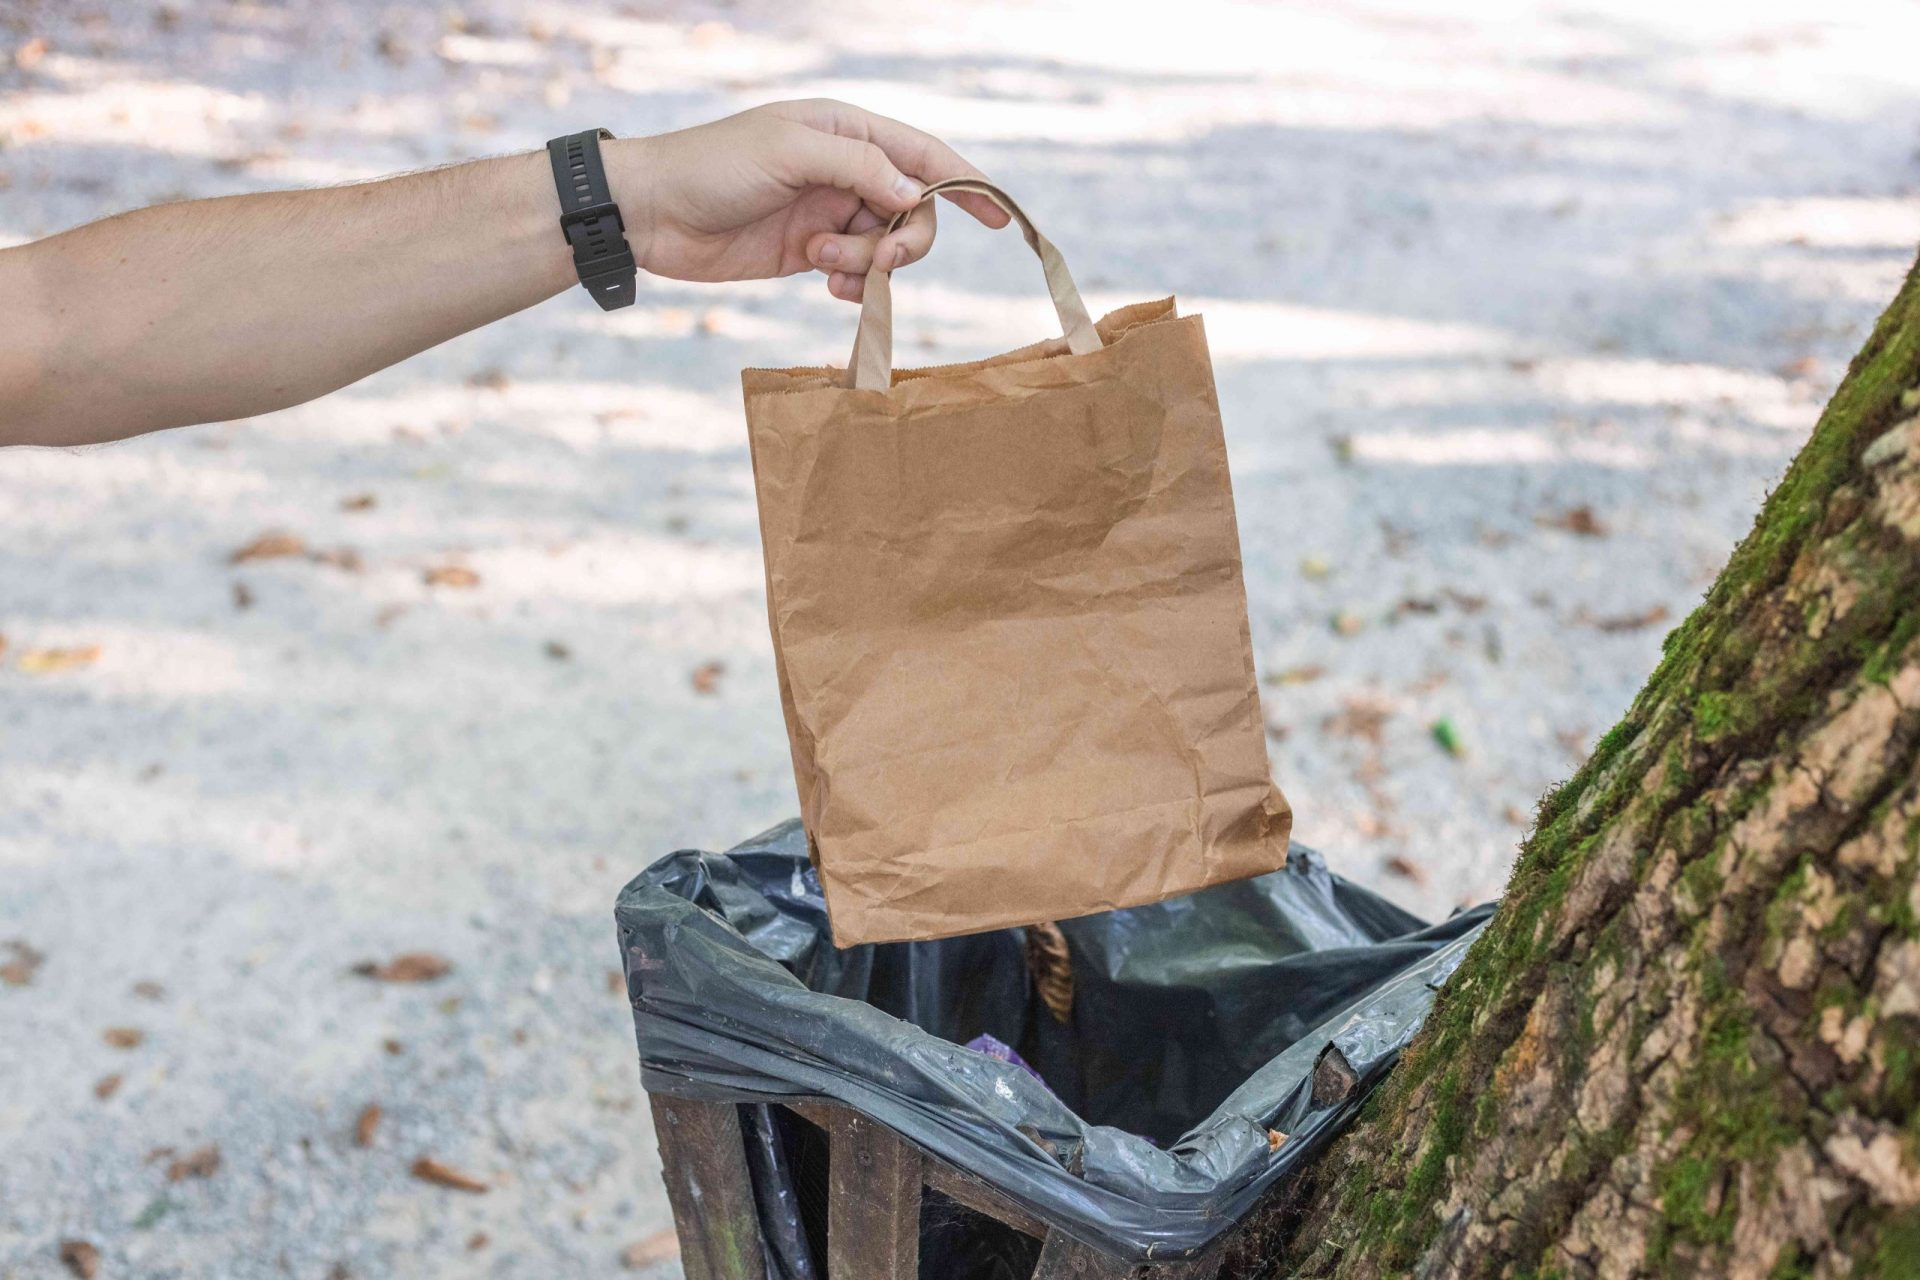 un excursionista tira una bolsa de papel marrón en la papelera del camping